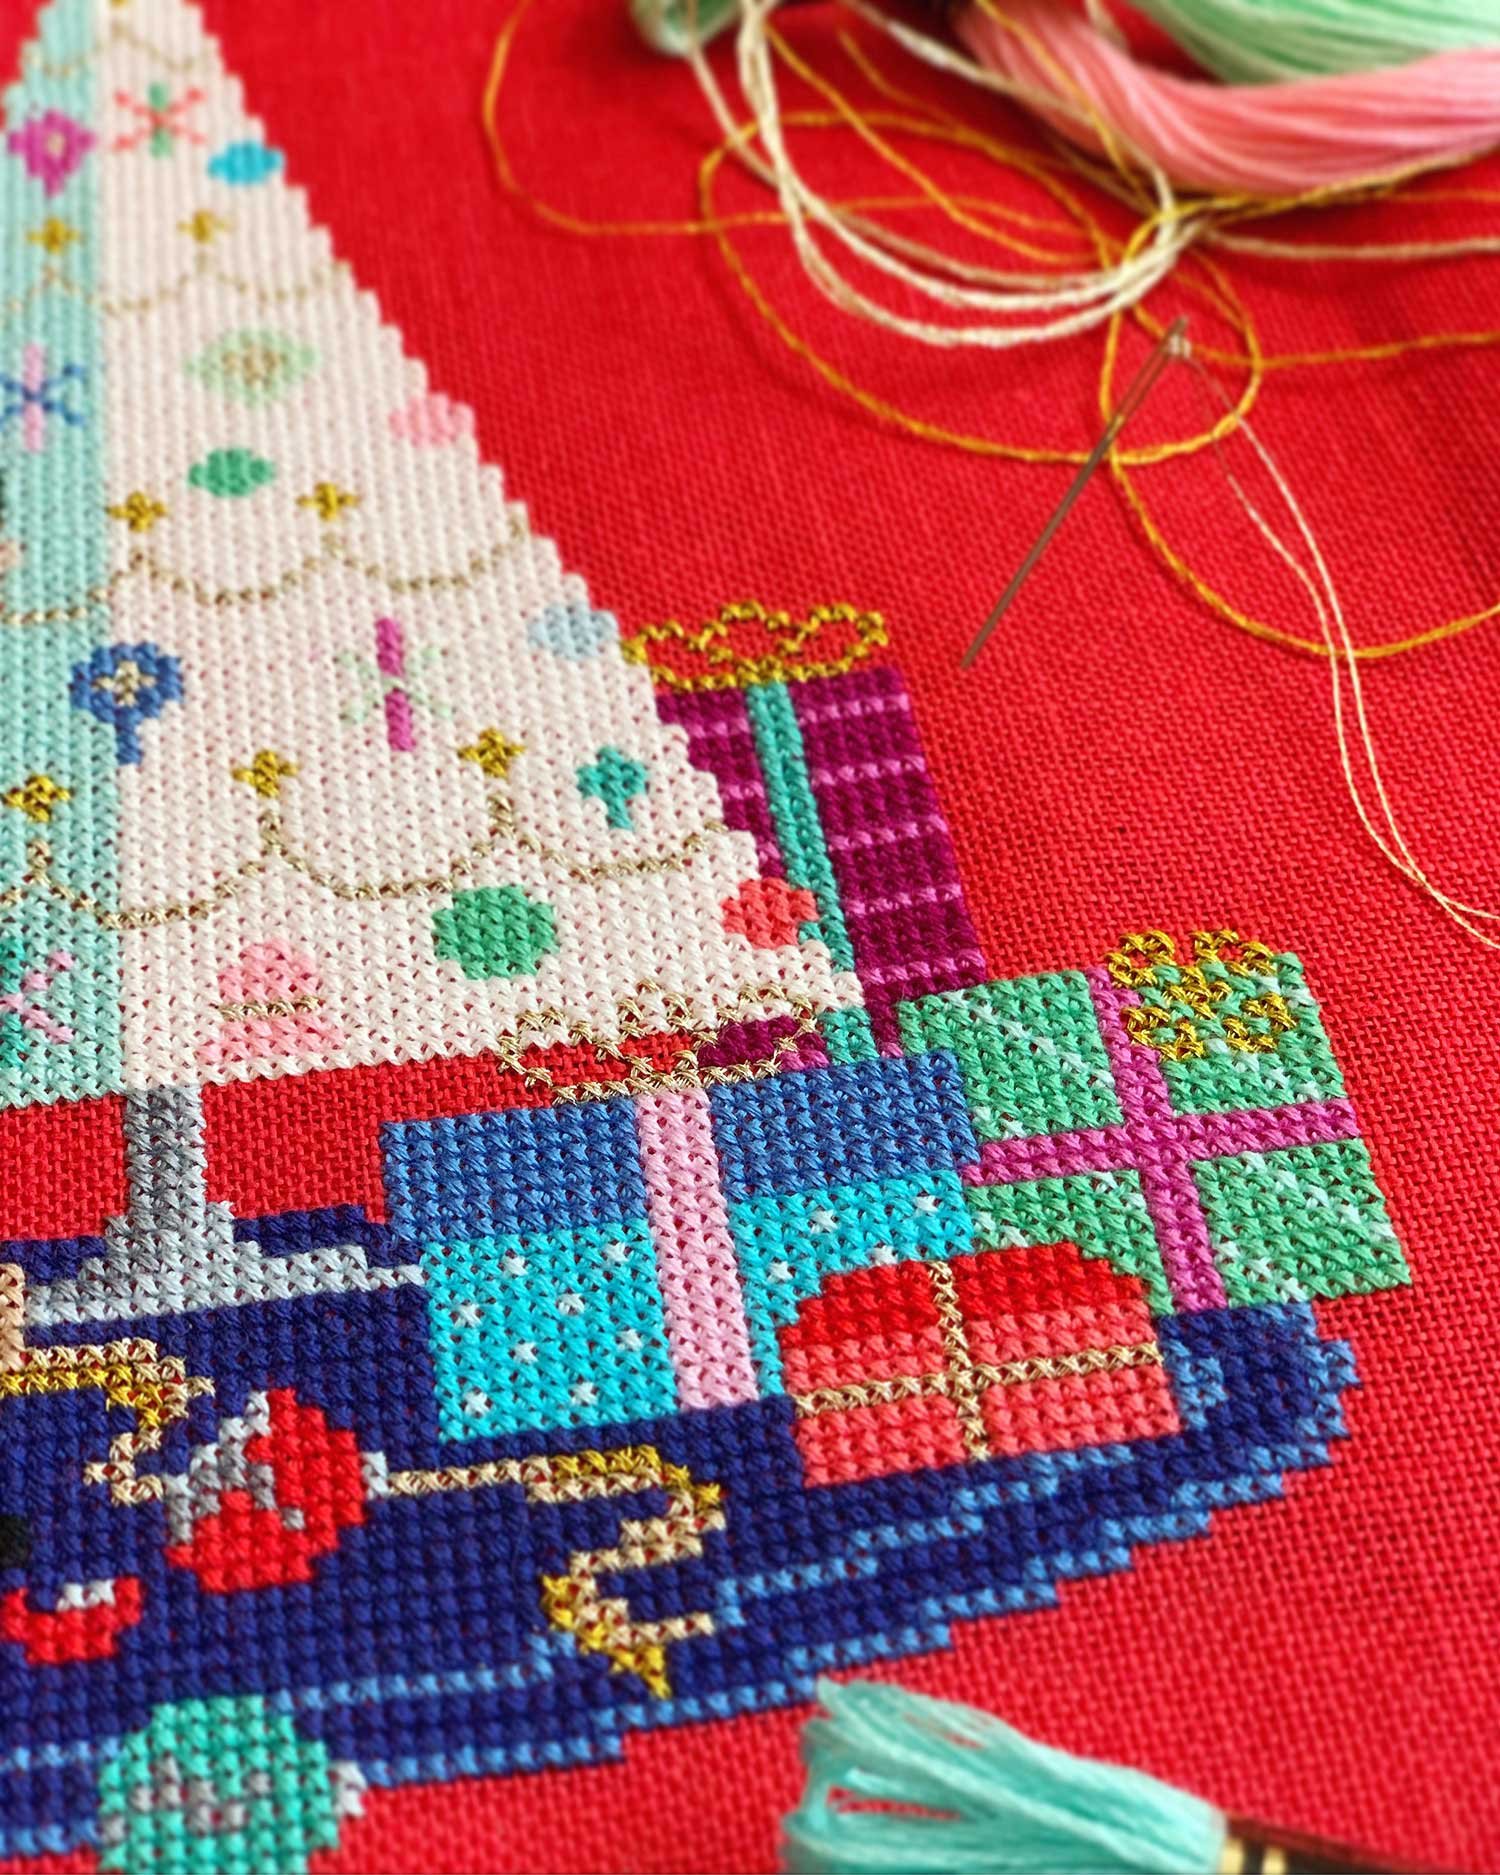 Christmas After Midnight Ornaments - Digital PDF Cross Stitch Pattern –  Lola Crow Cross Stitch